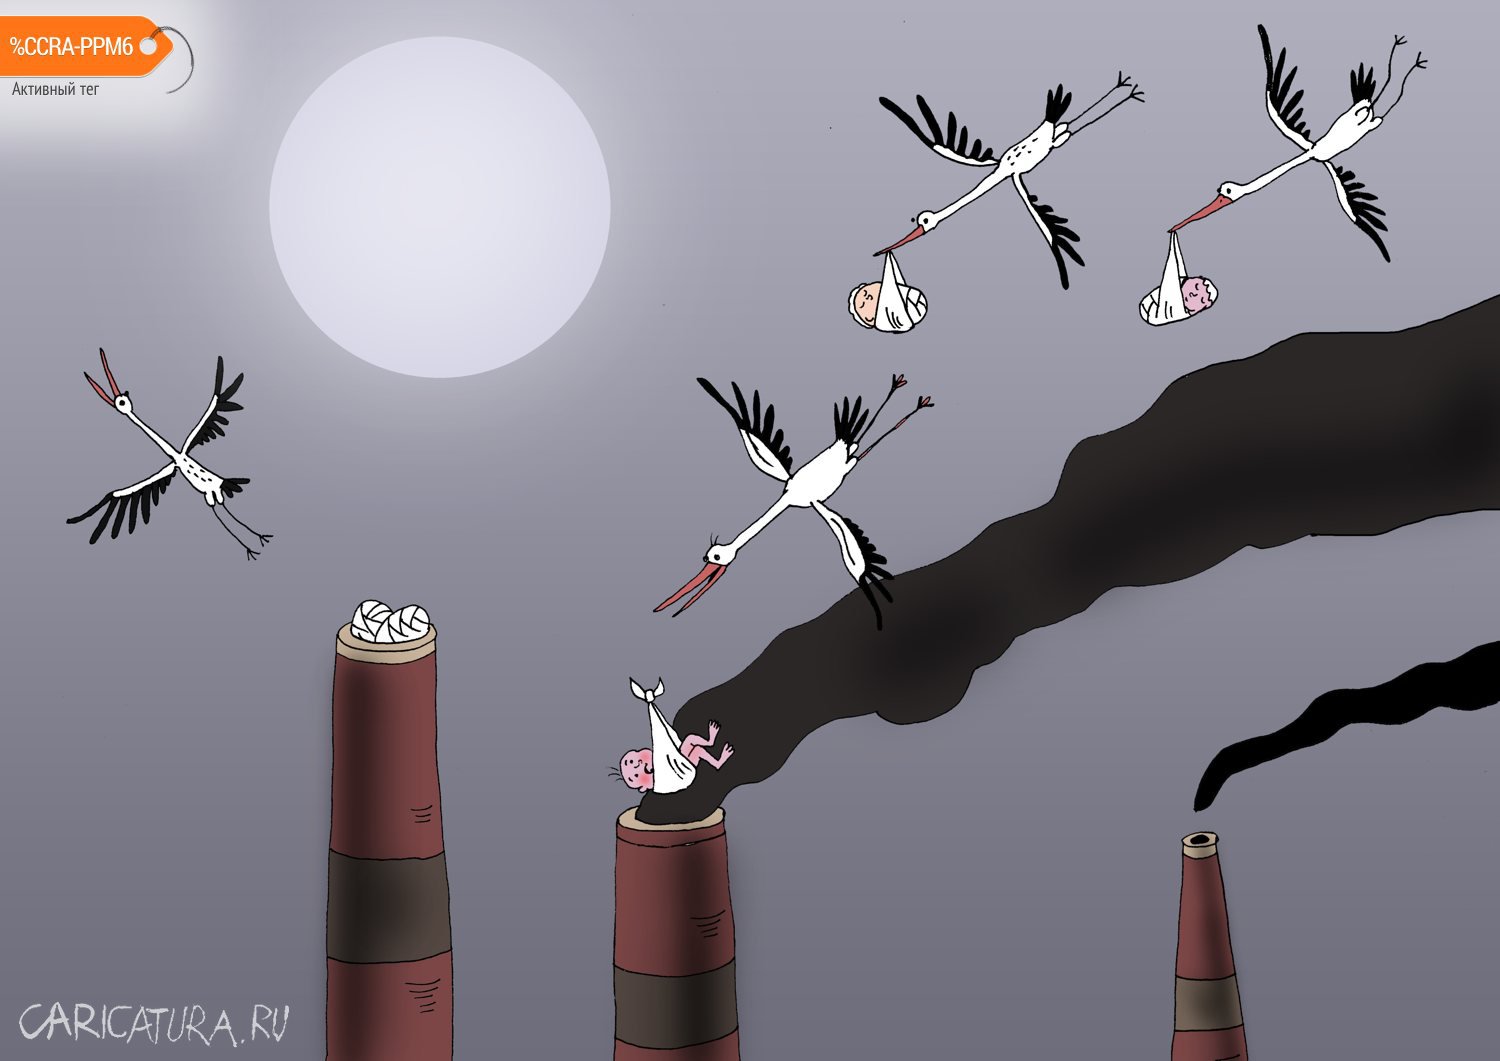 Карикатура "Трубы горят", Валерий Тарасенко